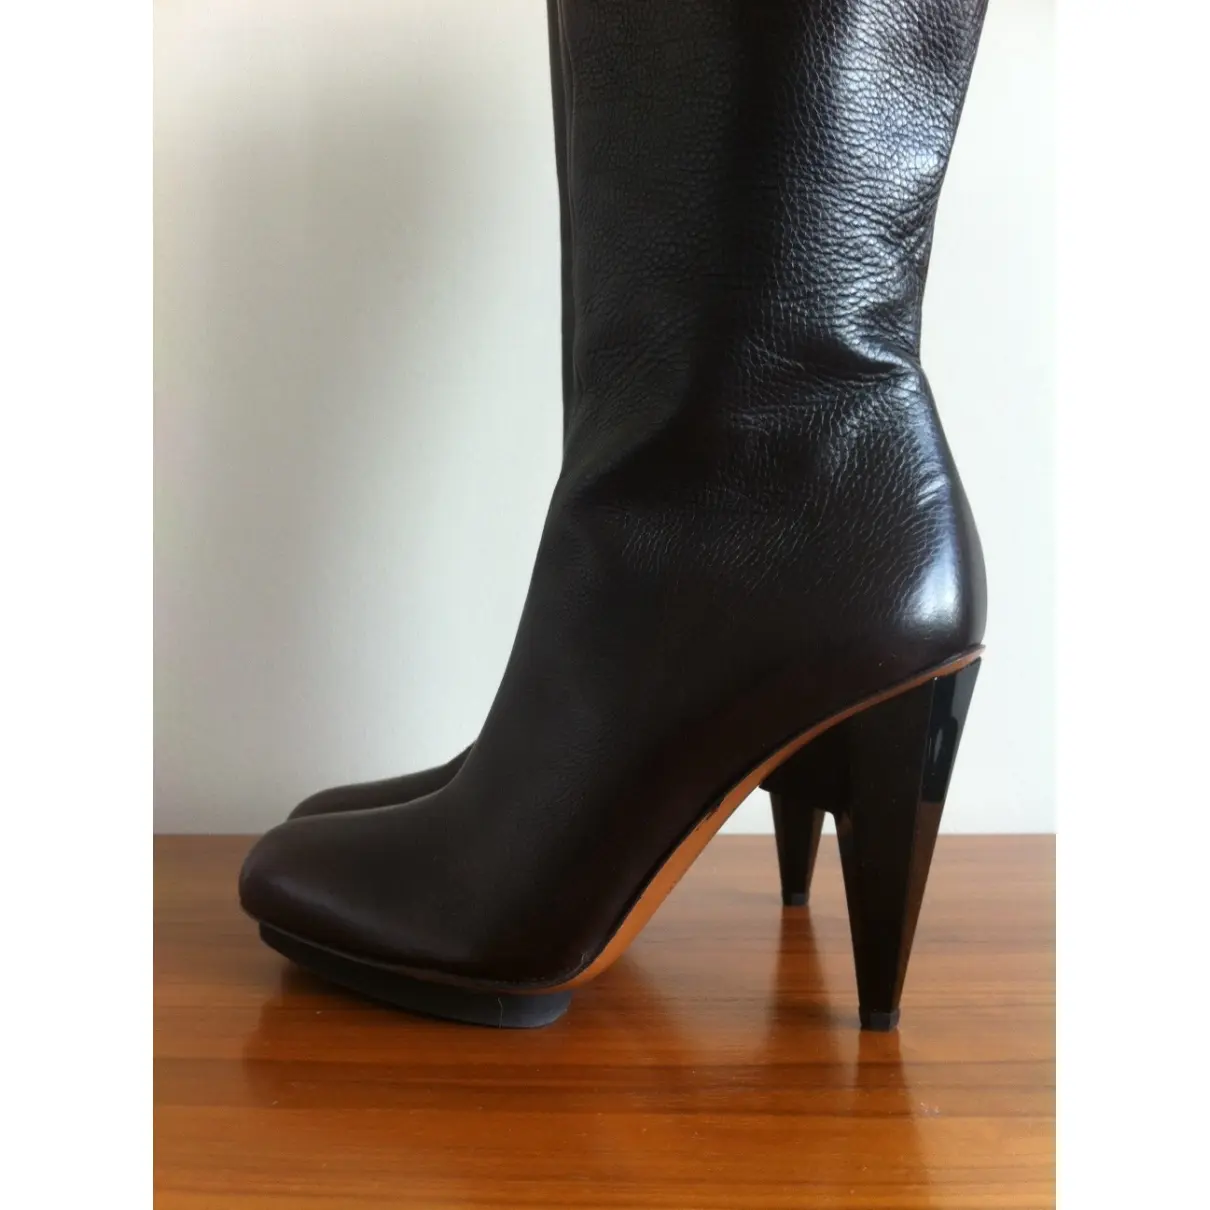 Leather boots Lanvin